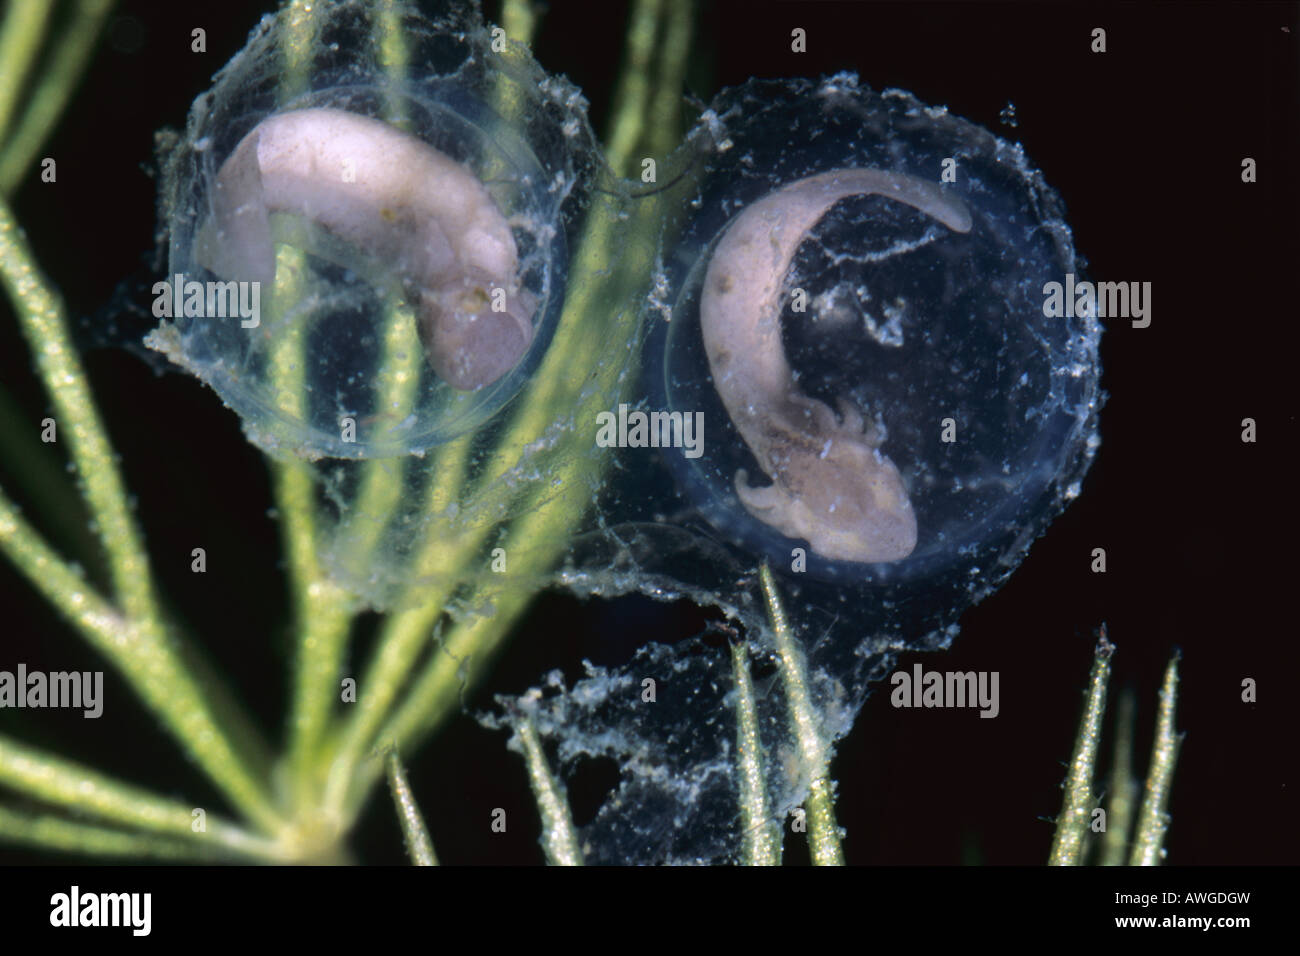 Ambystoma mexicanum, axolotl, salamander eggs, embrion Stock Photo